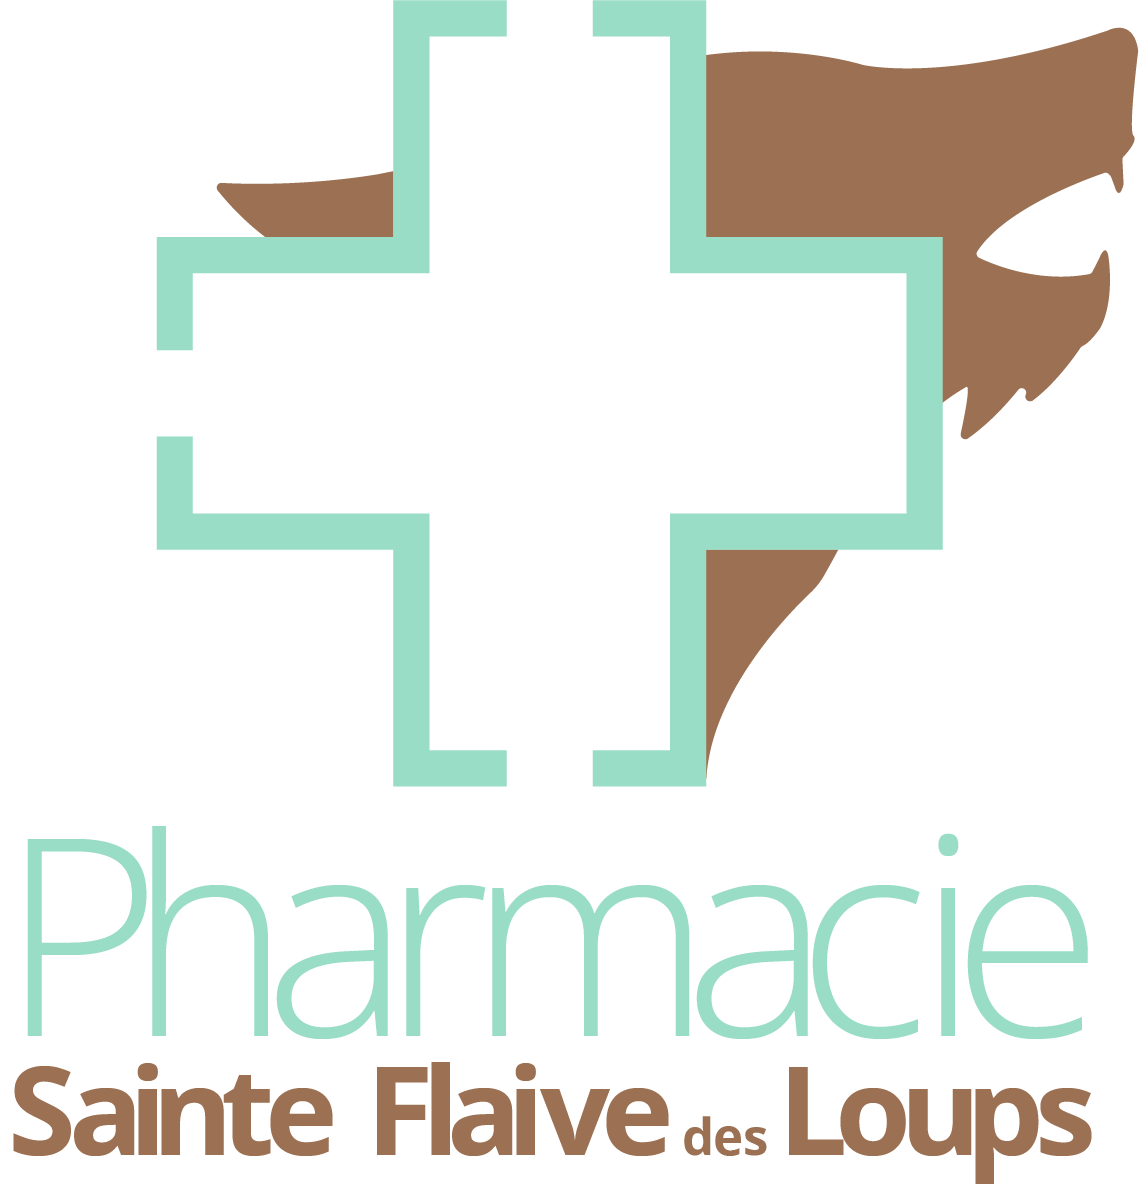 Pharmacie Sainte Flaive des Loups